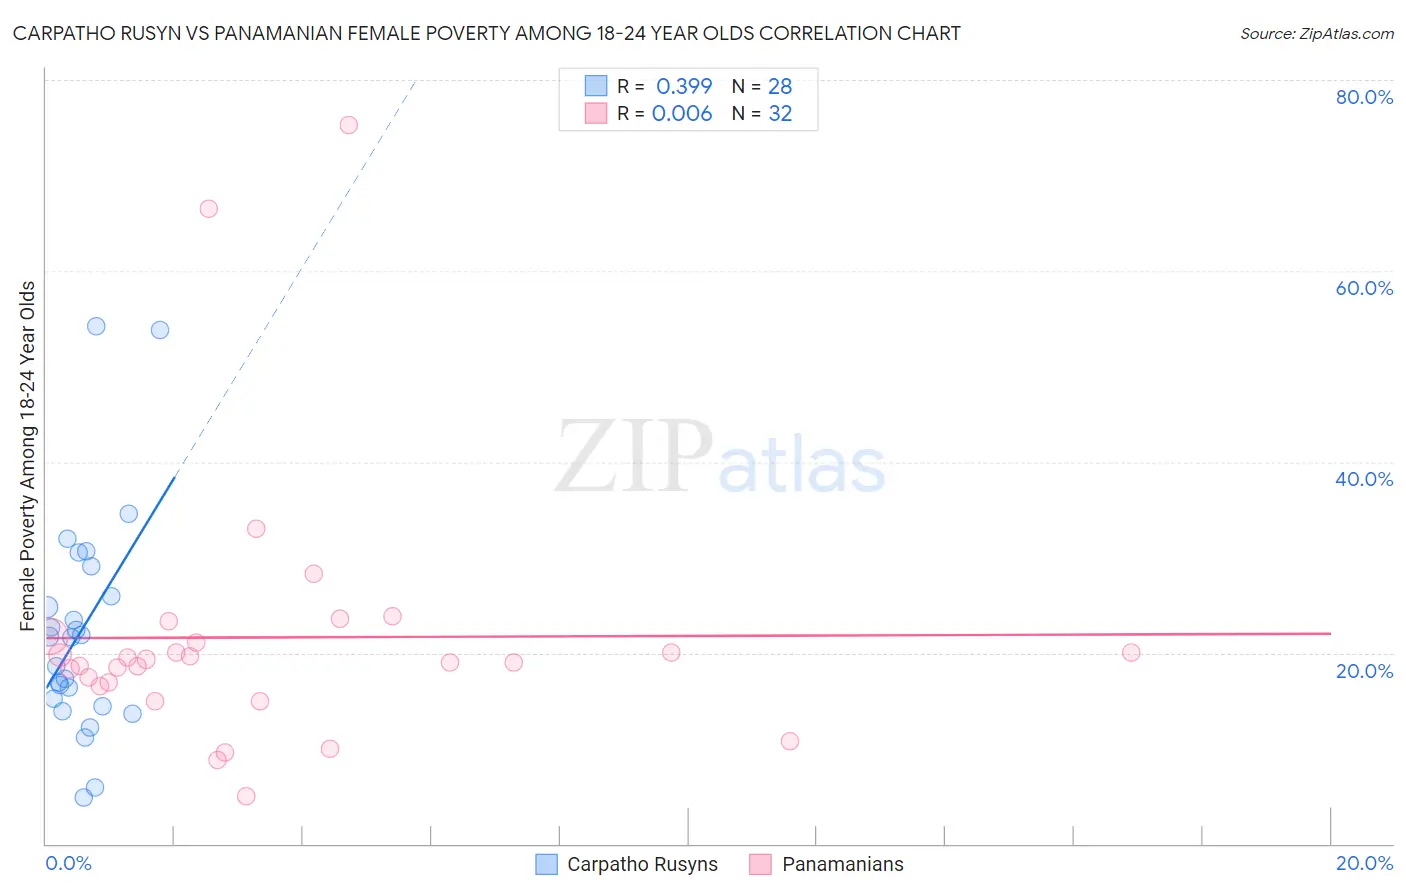 Carpatho Rusyn vs Panamanian Female Poverty Among 18-24 Year Olds